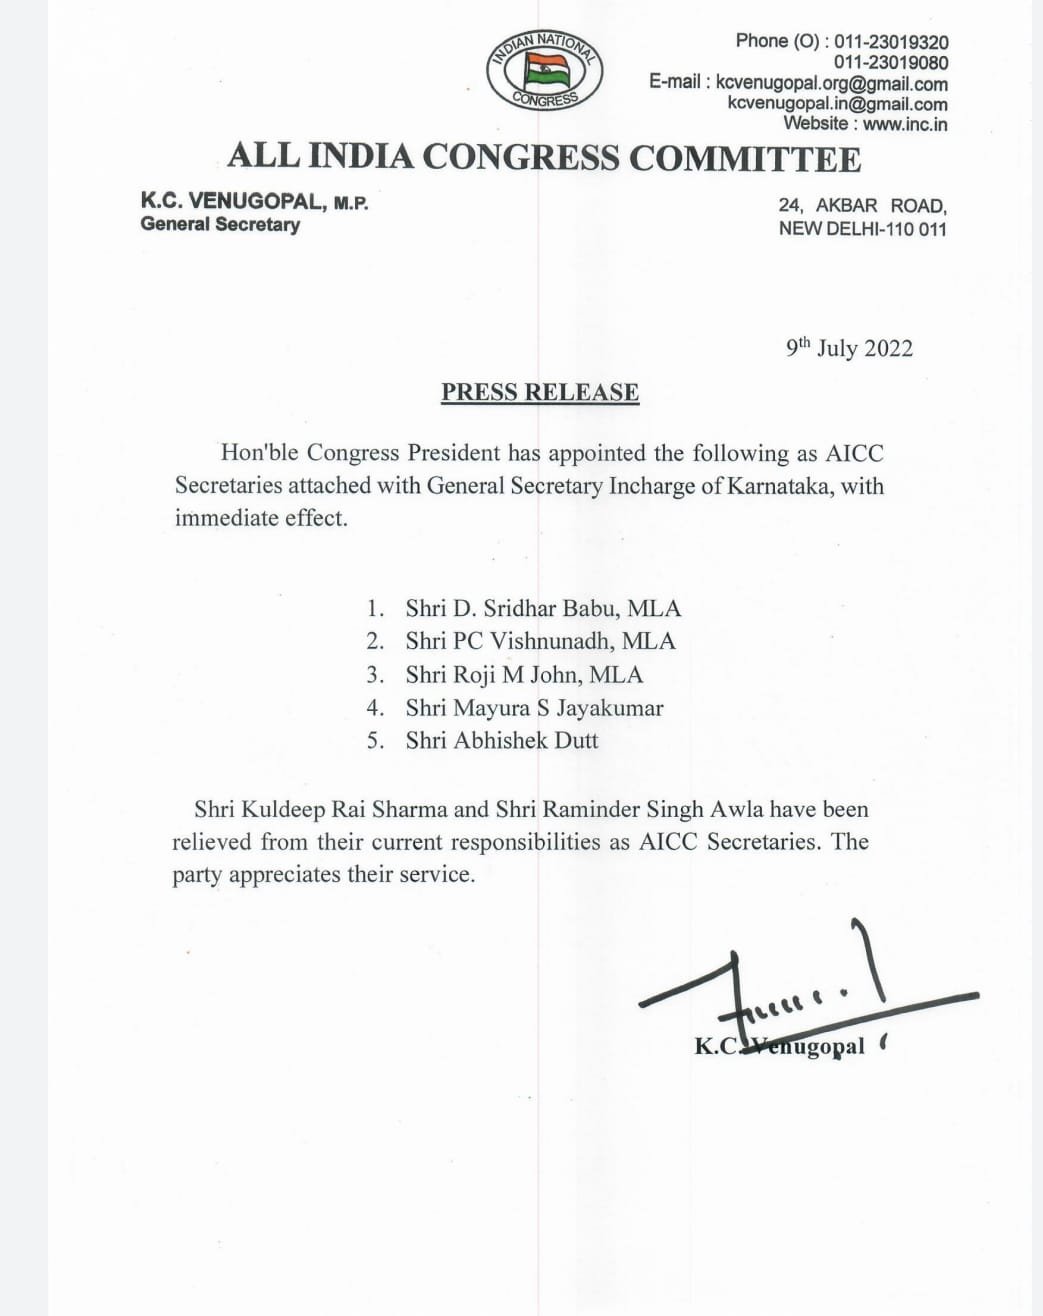 Cong sets up political affairs committee for Karnataka, names 5 AICC secretaries